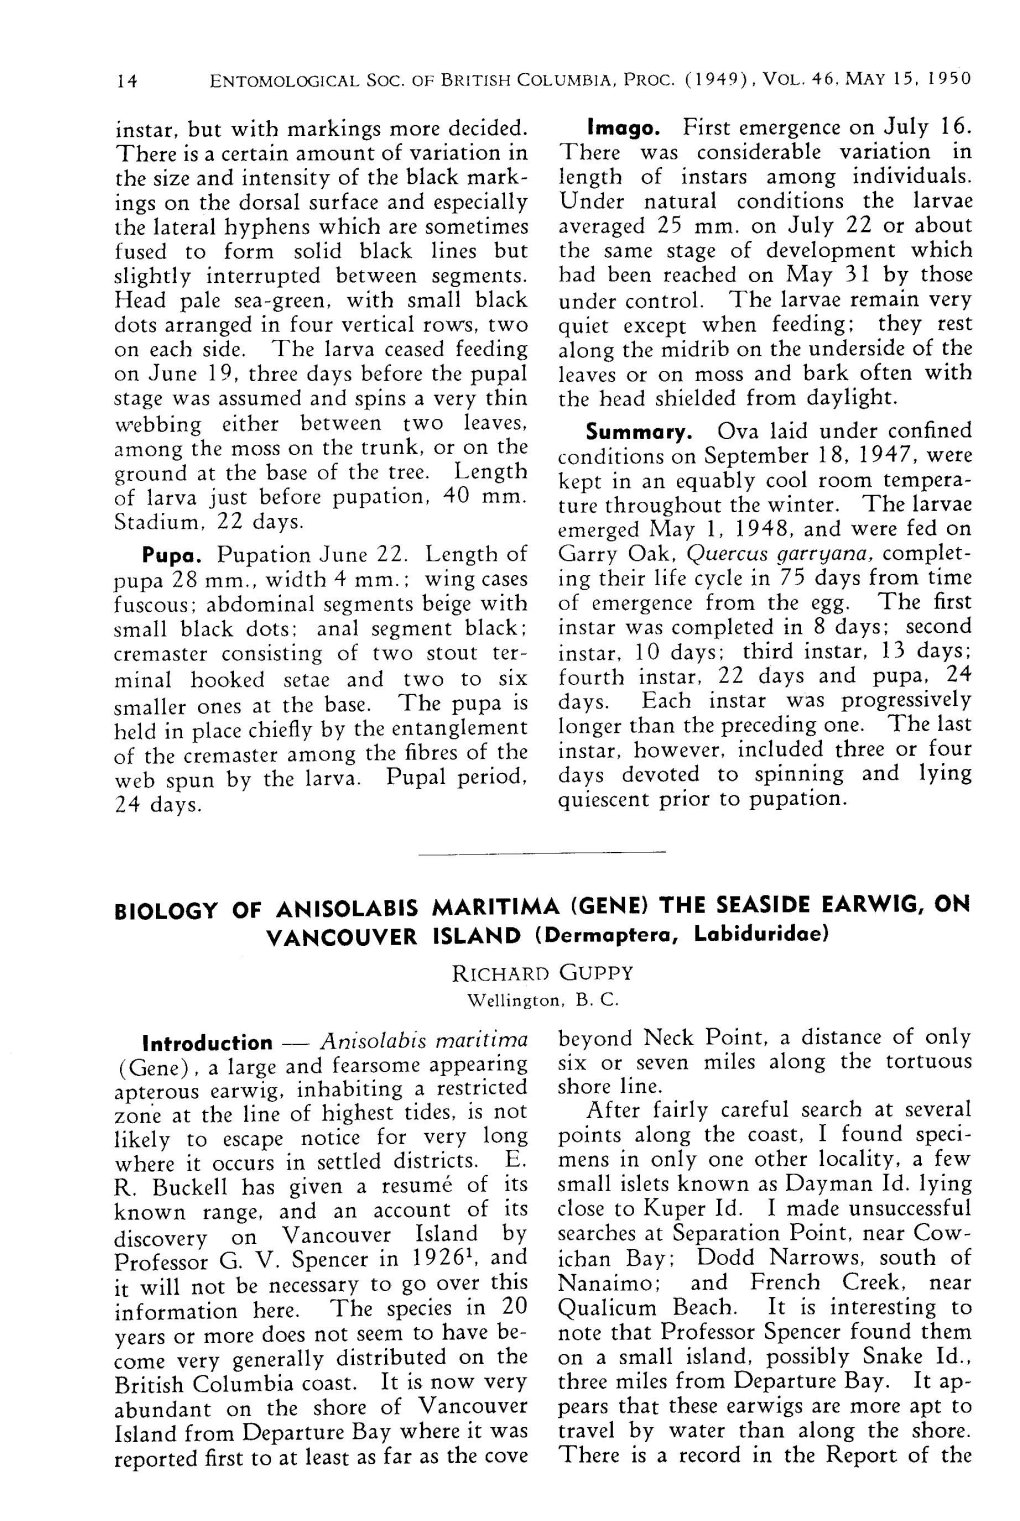 BIOLOGY of ANISOLABIS MARITIMA (GENE) the SEASIDE EARWIG, on VANCOUVER ISLAN D (Dermaptera, Labiduridae) RICHARD Guppy Wellington, B